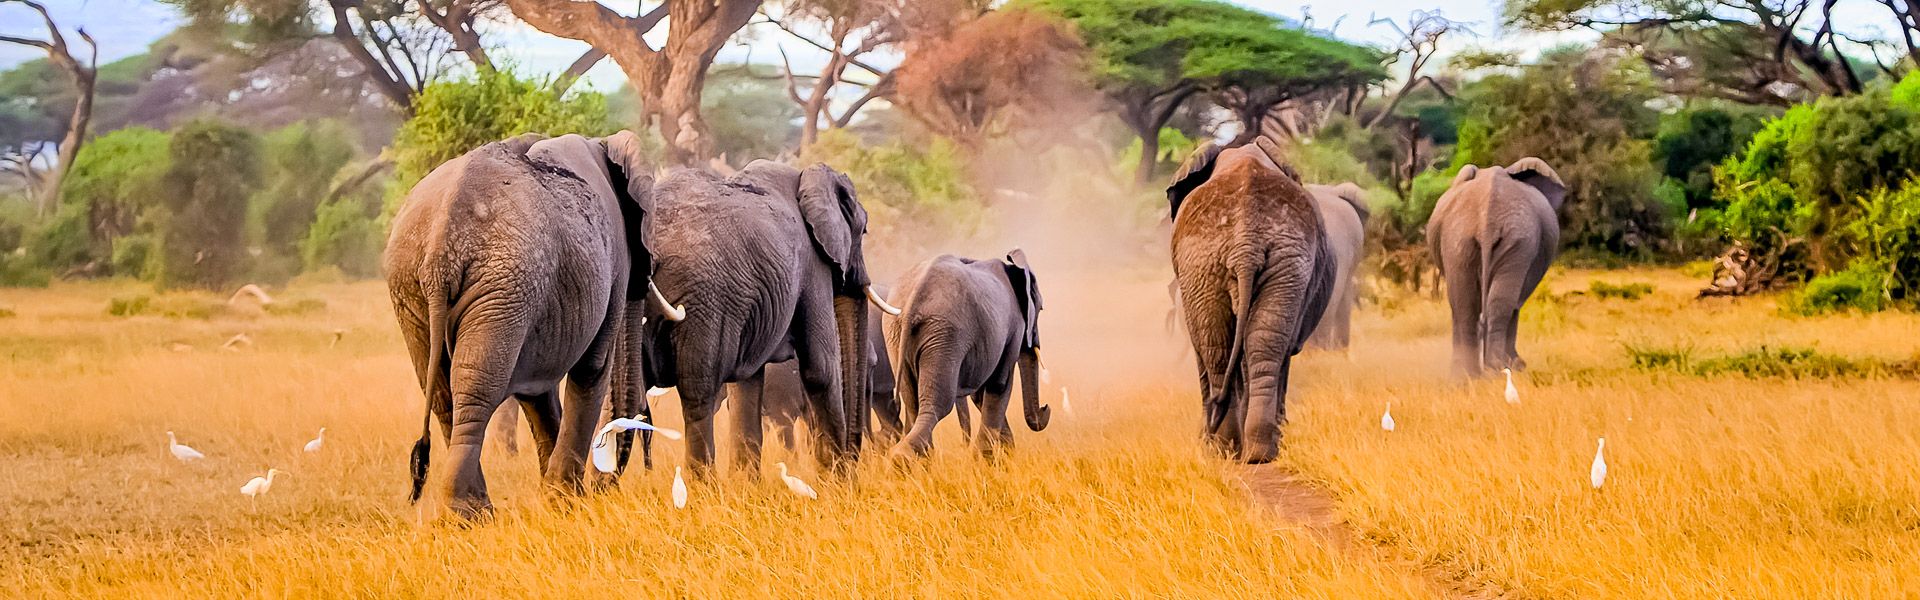 Elefantenfamilie |  Byrdyak, iStockphoto.com / Chamleon